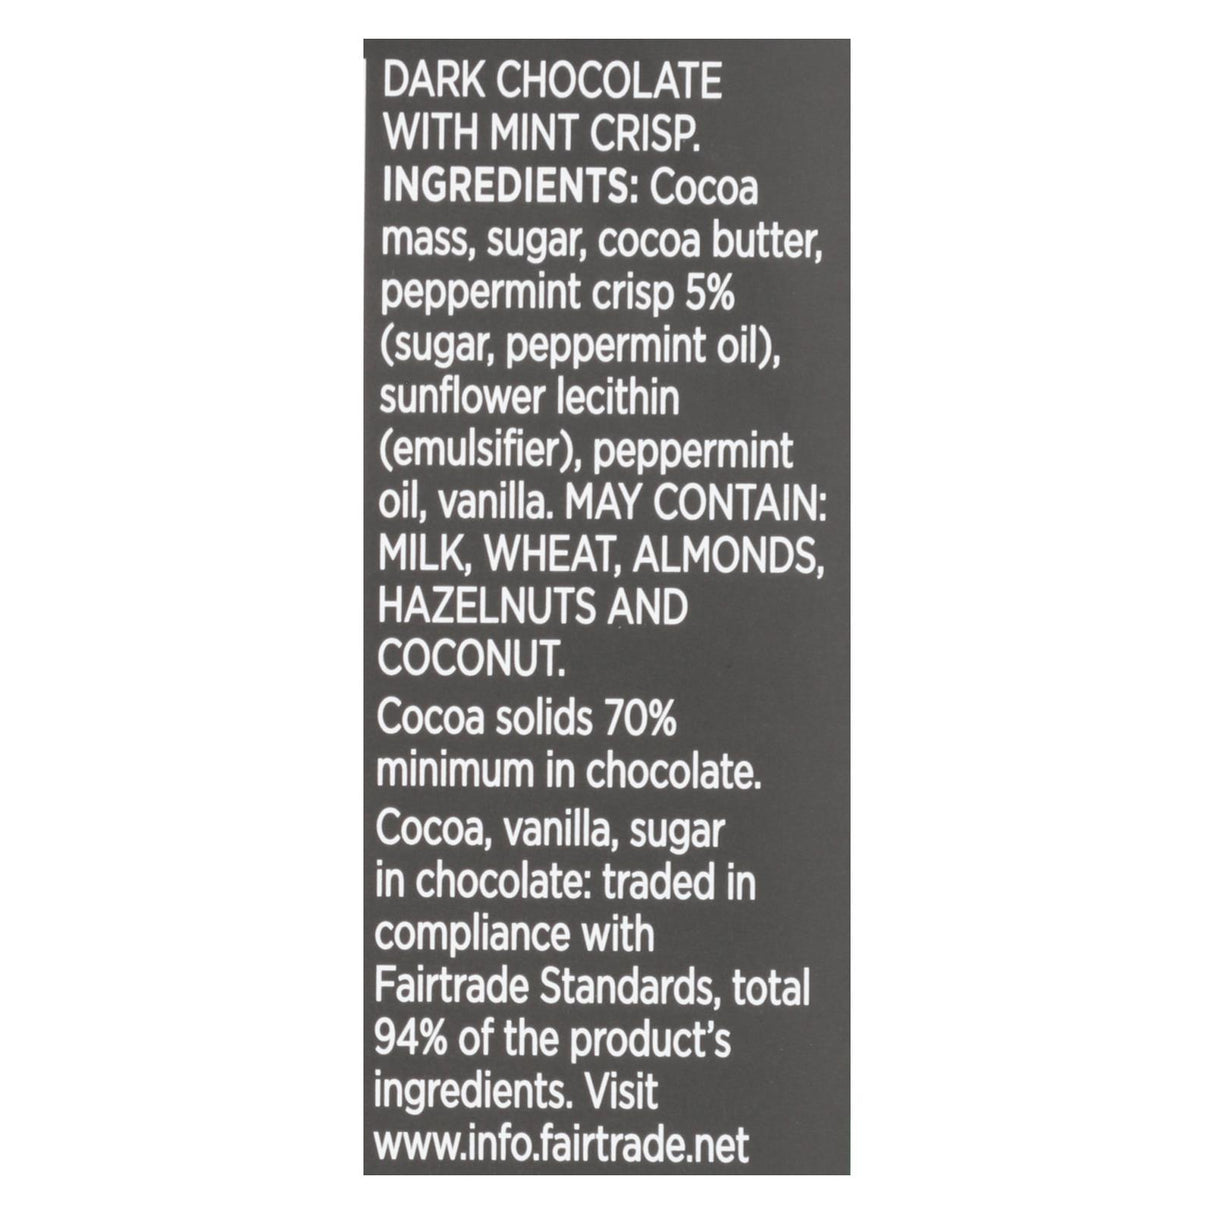 Divine Dark Chocolate Bar with Mint Crisp (Pack of 12 - 3 Oz.) - Cozy Farm 